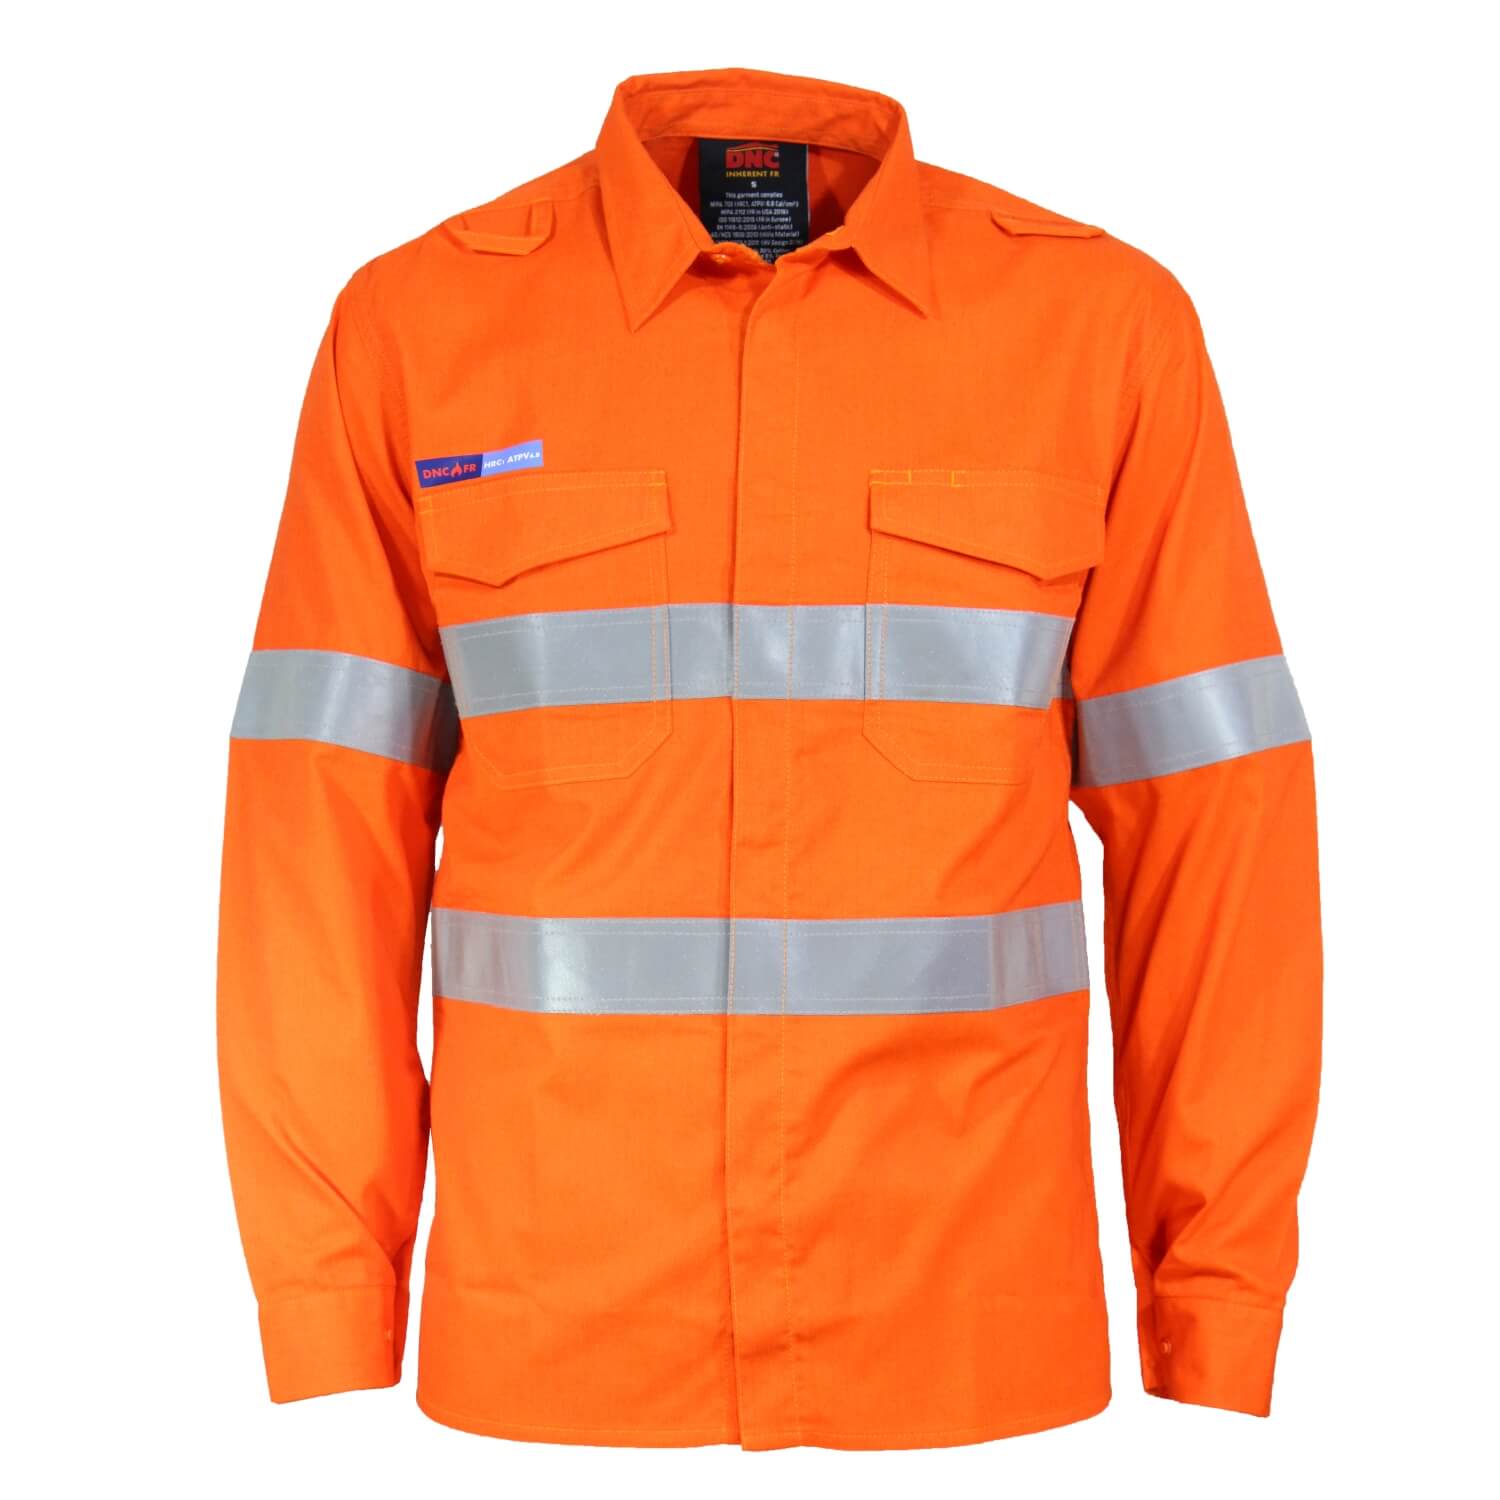 DNC Inherent Fr PPE1 L/W D/N Shirt (3446)